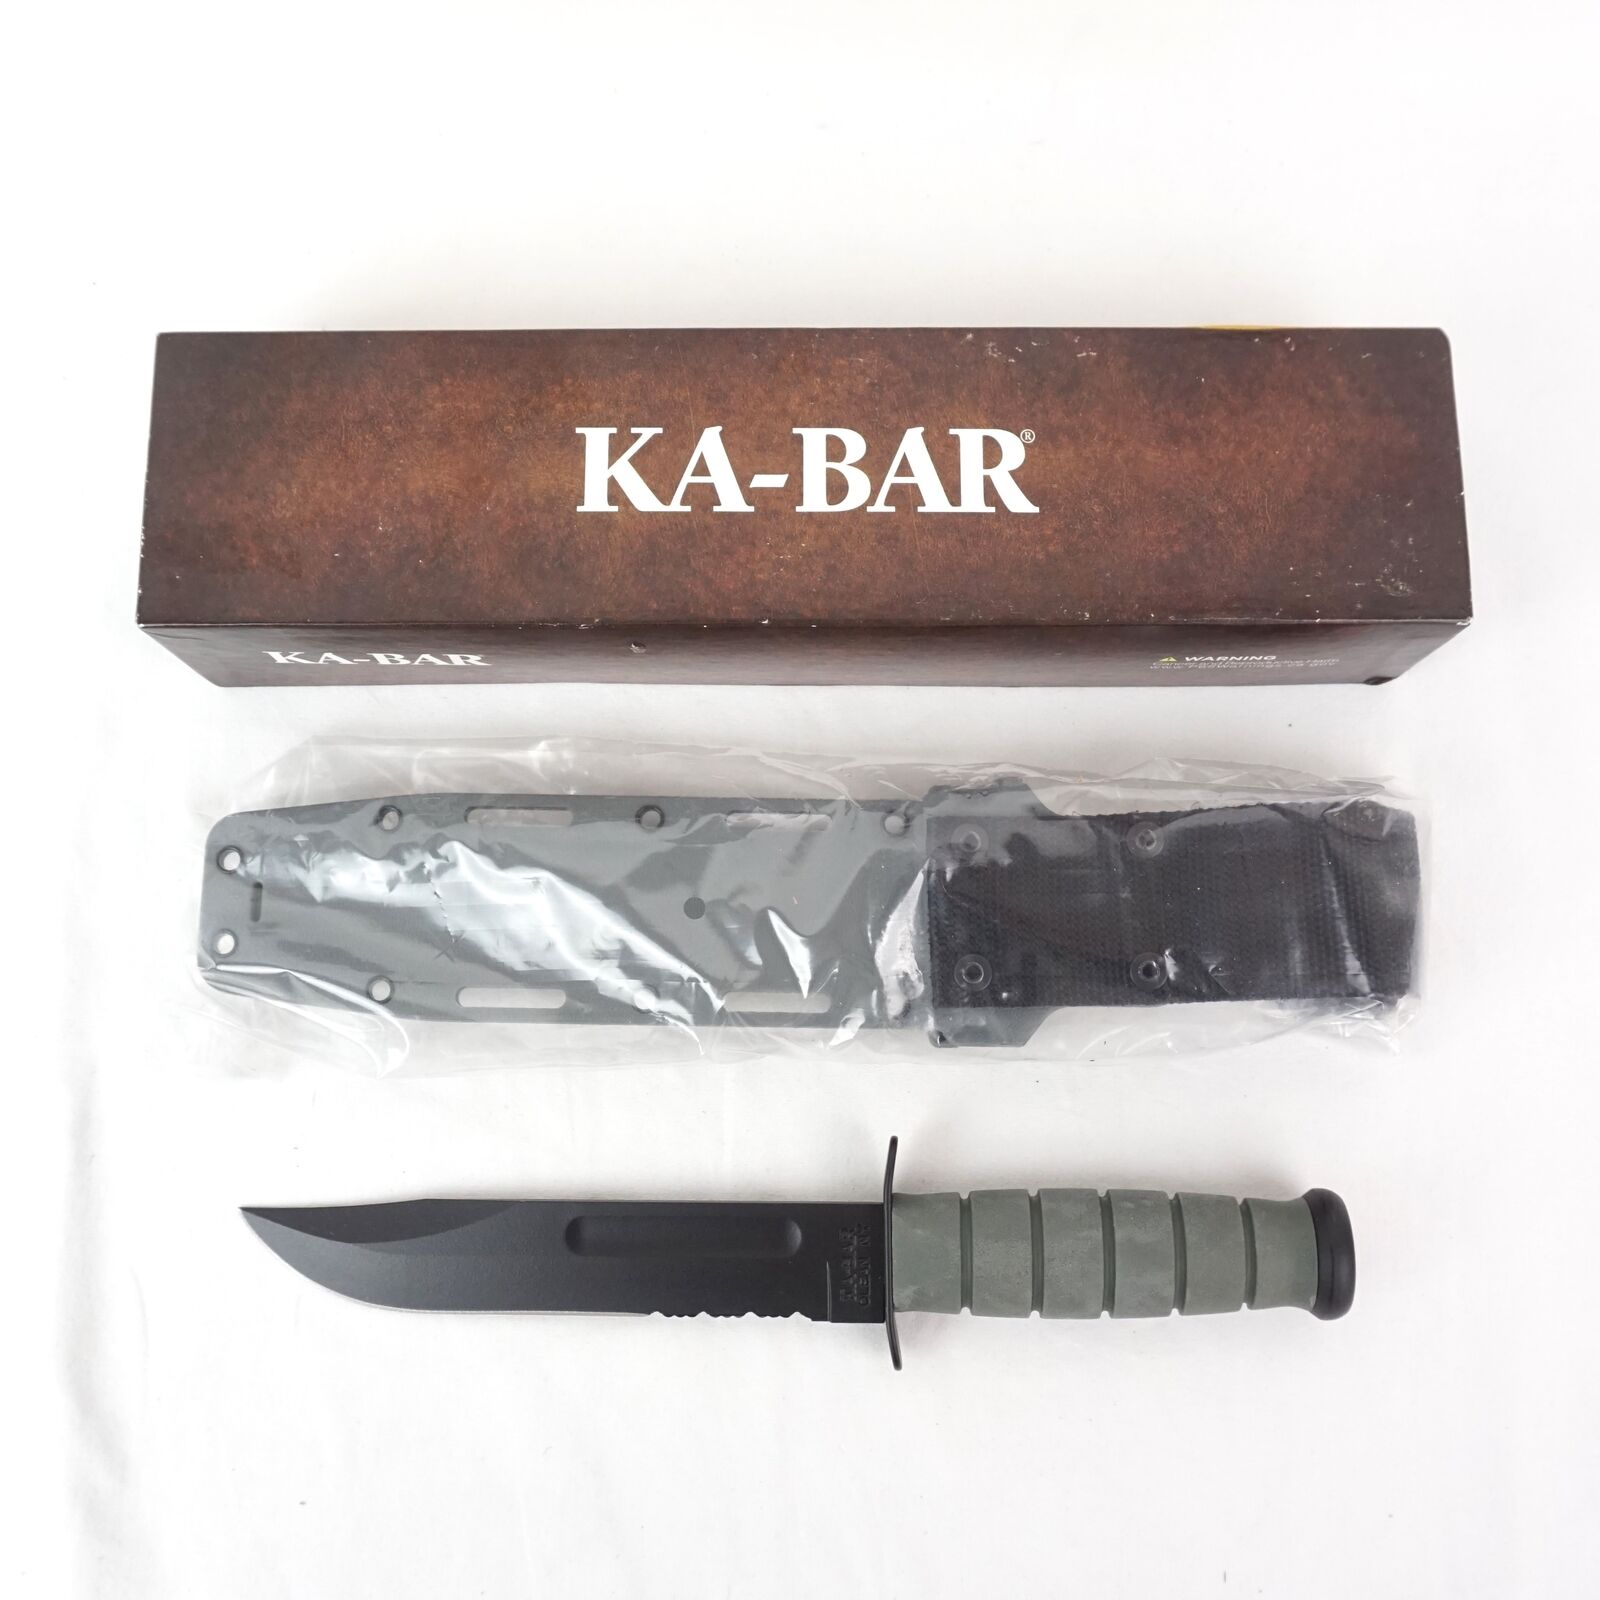 KA-BAR 5012 Combat Utility Serrated Fixed Knife In Foliage Green 5012 W/ Sheath 